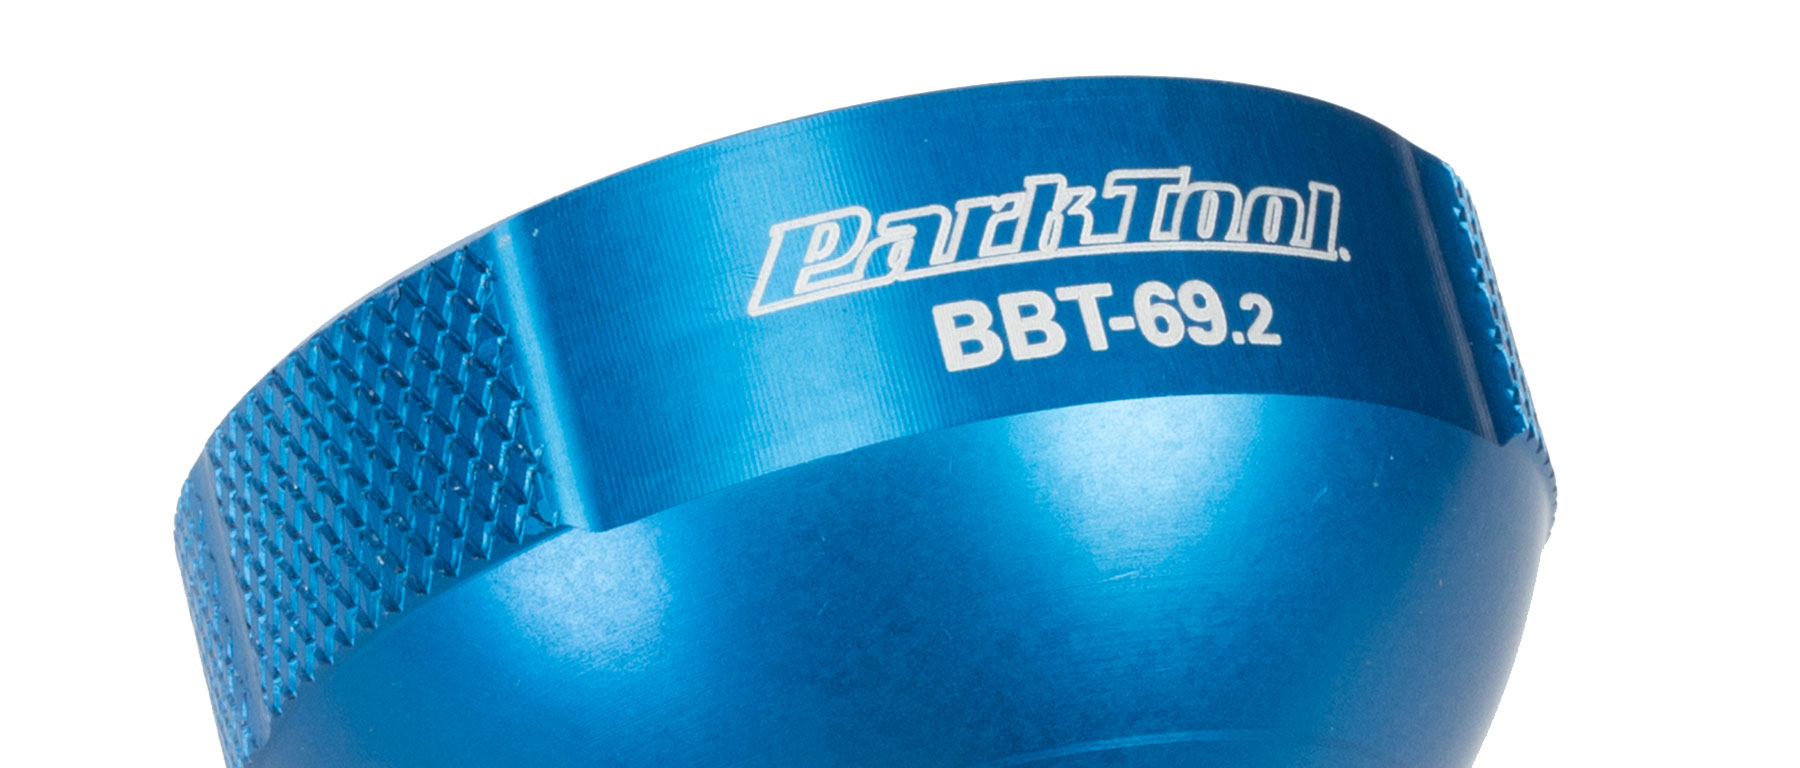 Park Tool BBT-69.2 Bottom Bracket Tool